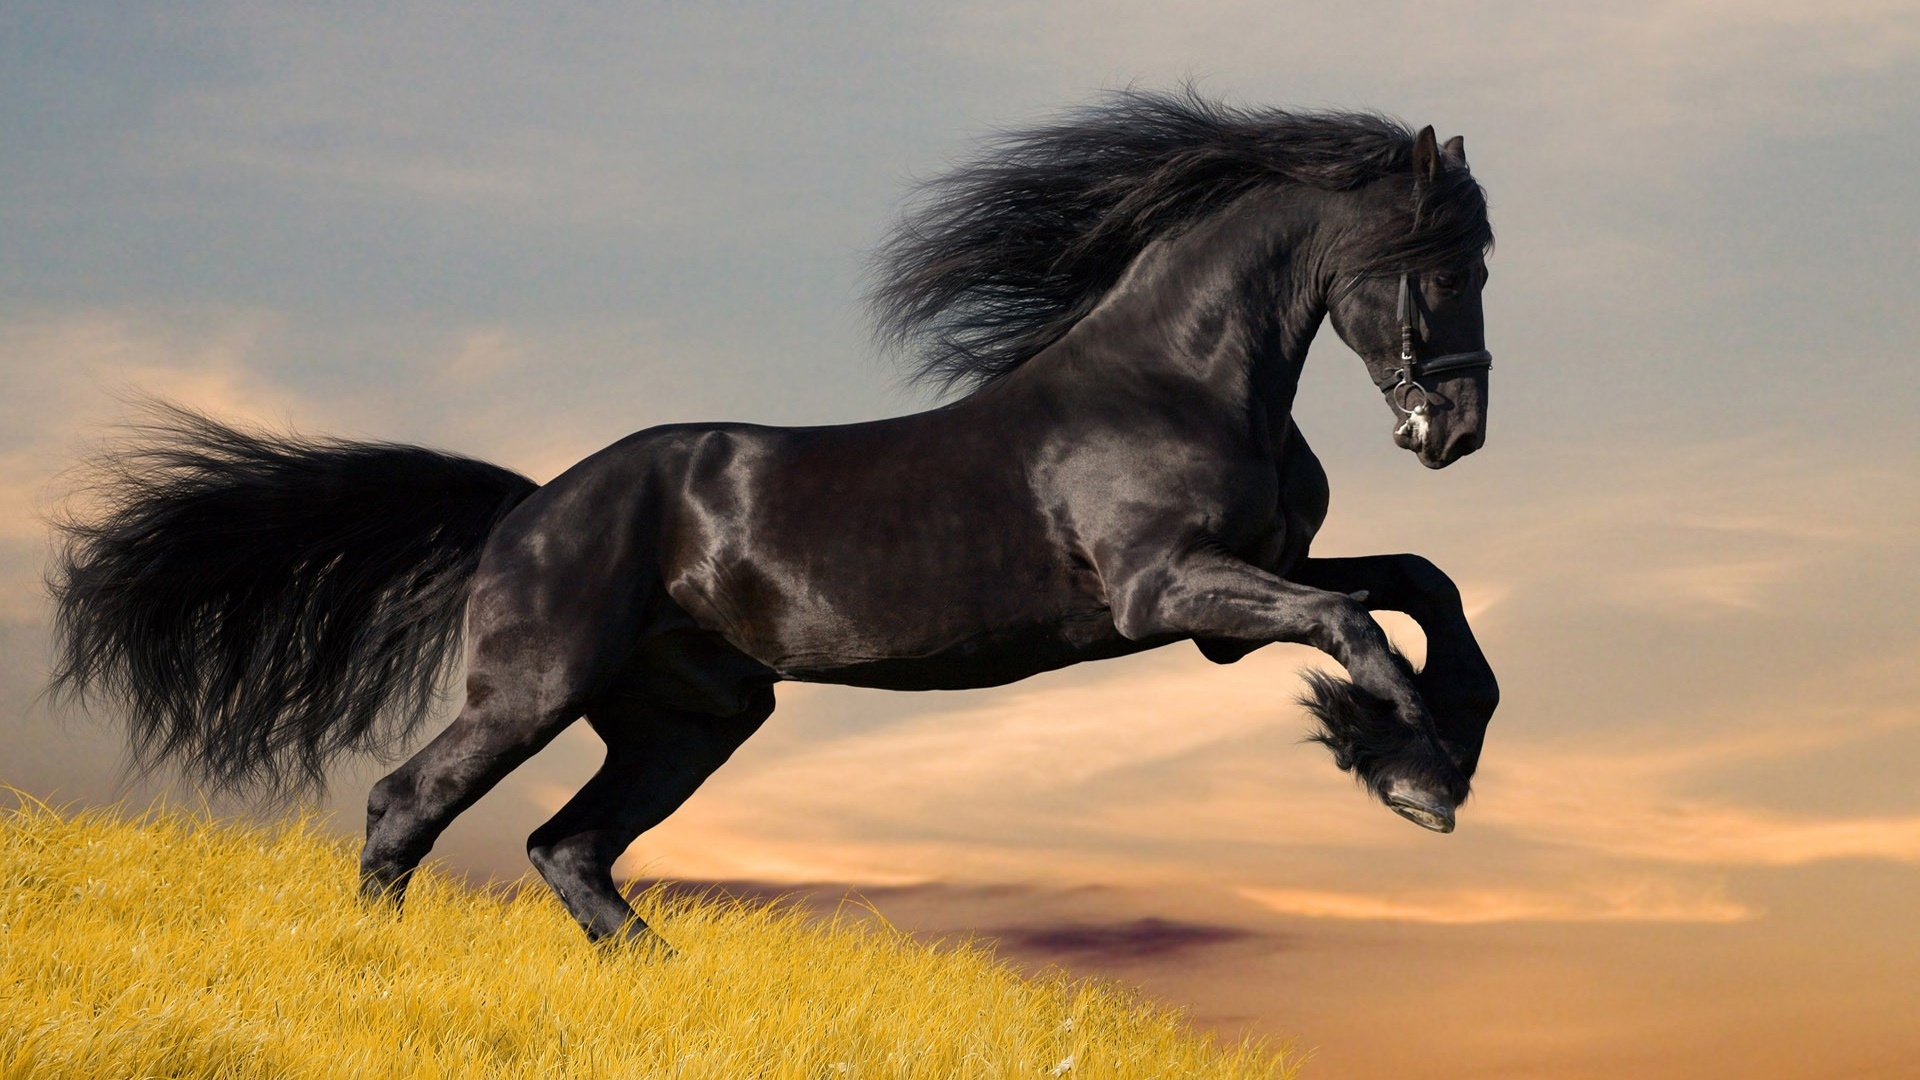 Amazing Black Horse for 1920 x 1080 HDTV 1080p resolution